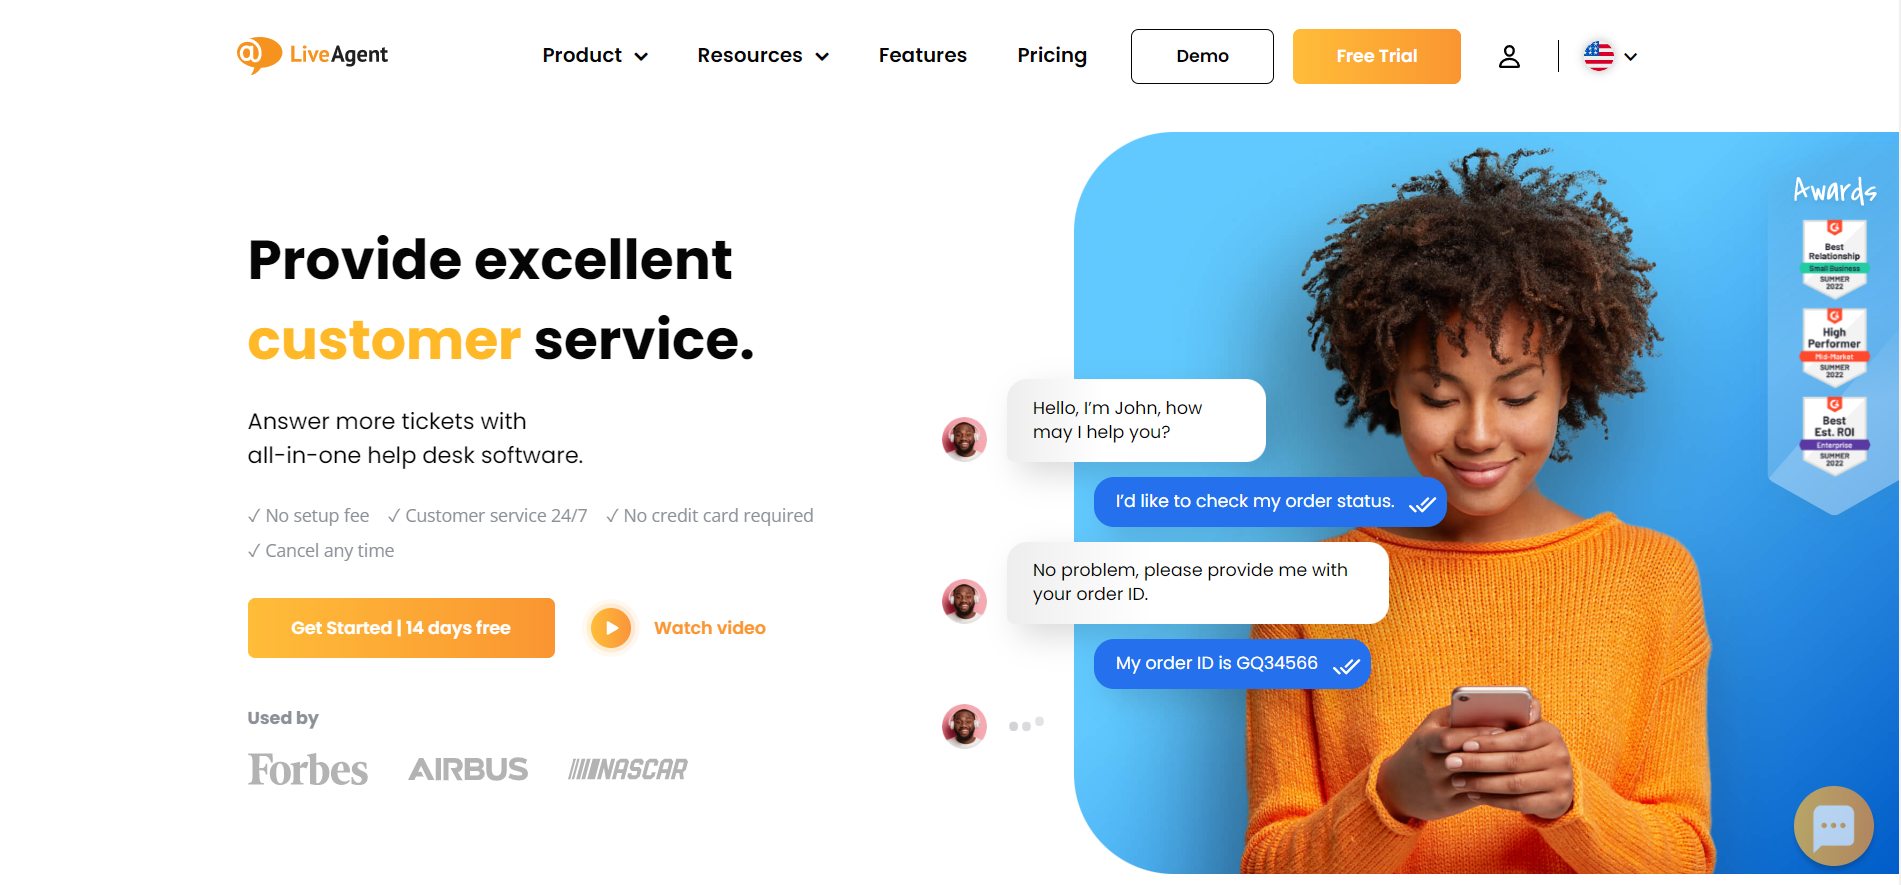 LiveAgent as a customer service software